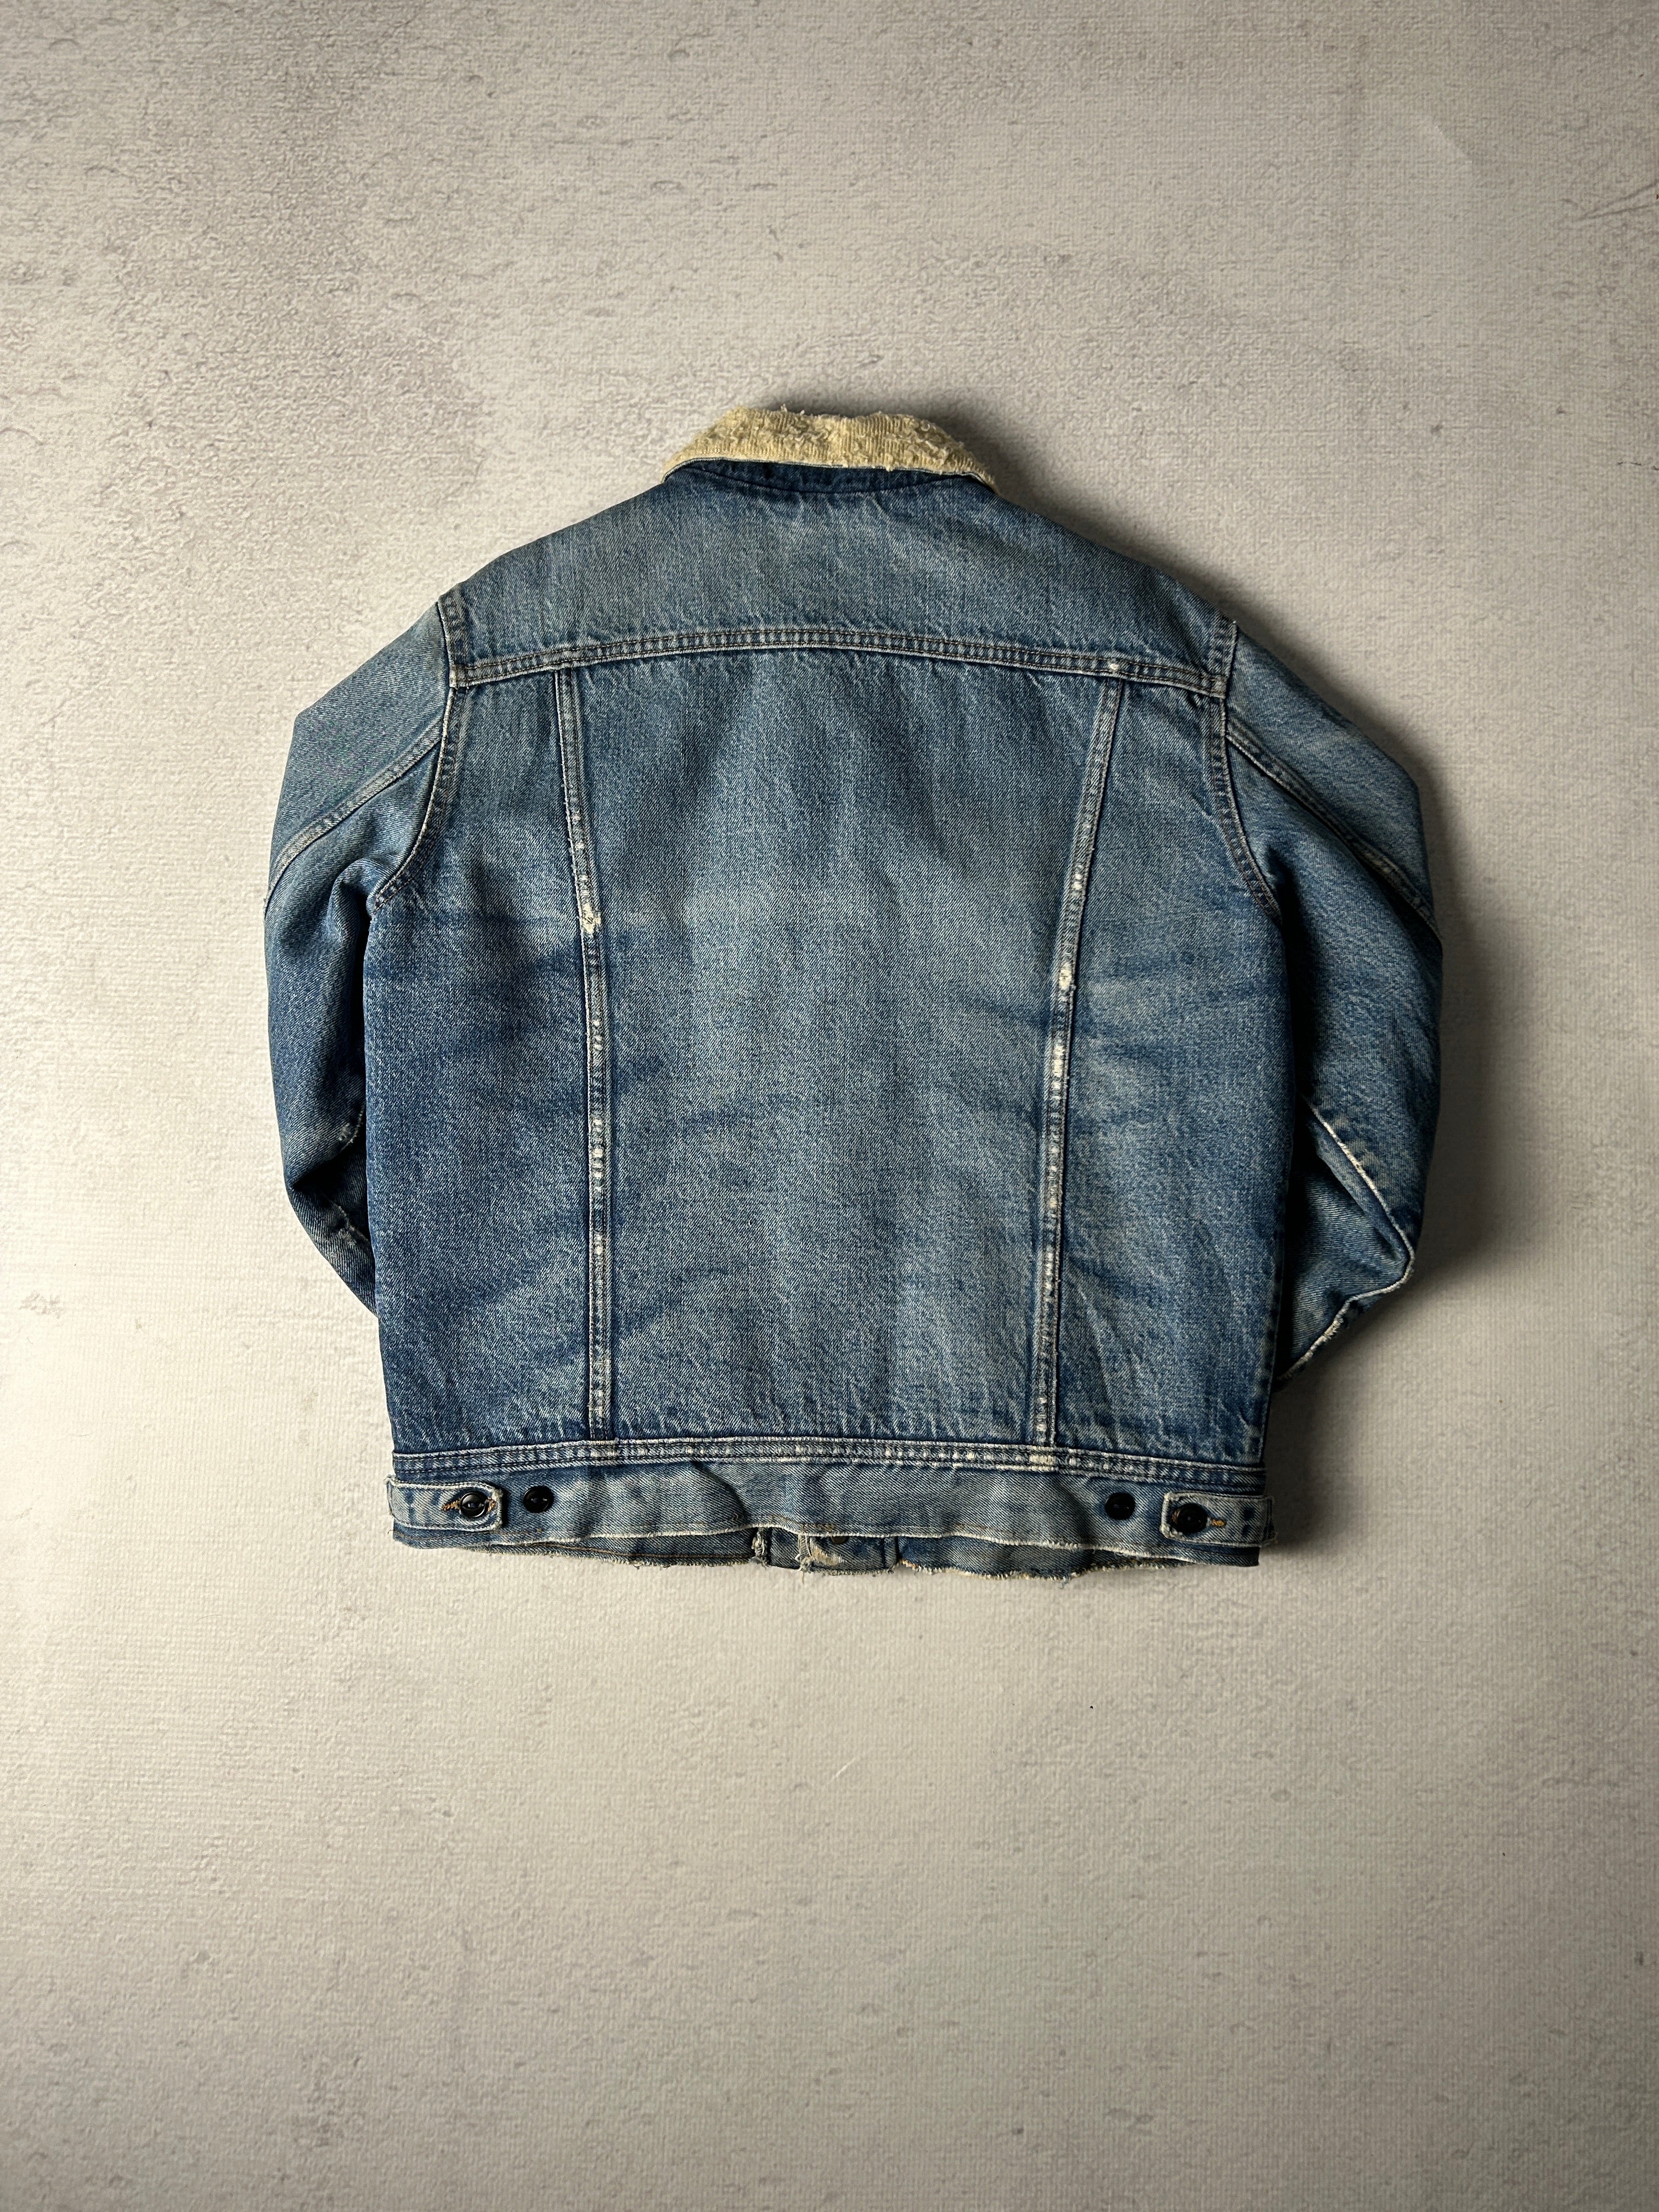 Vintage Lee Sherpa Lined Denim Jacket - Men's Medium